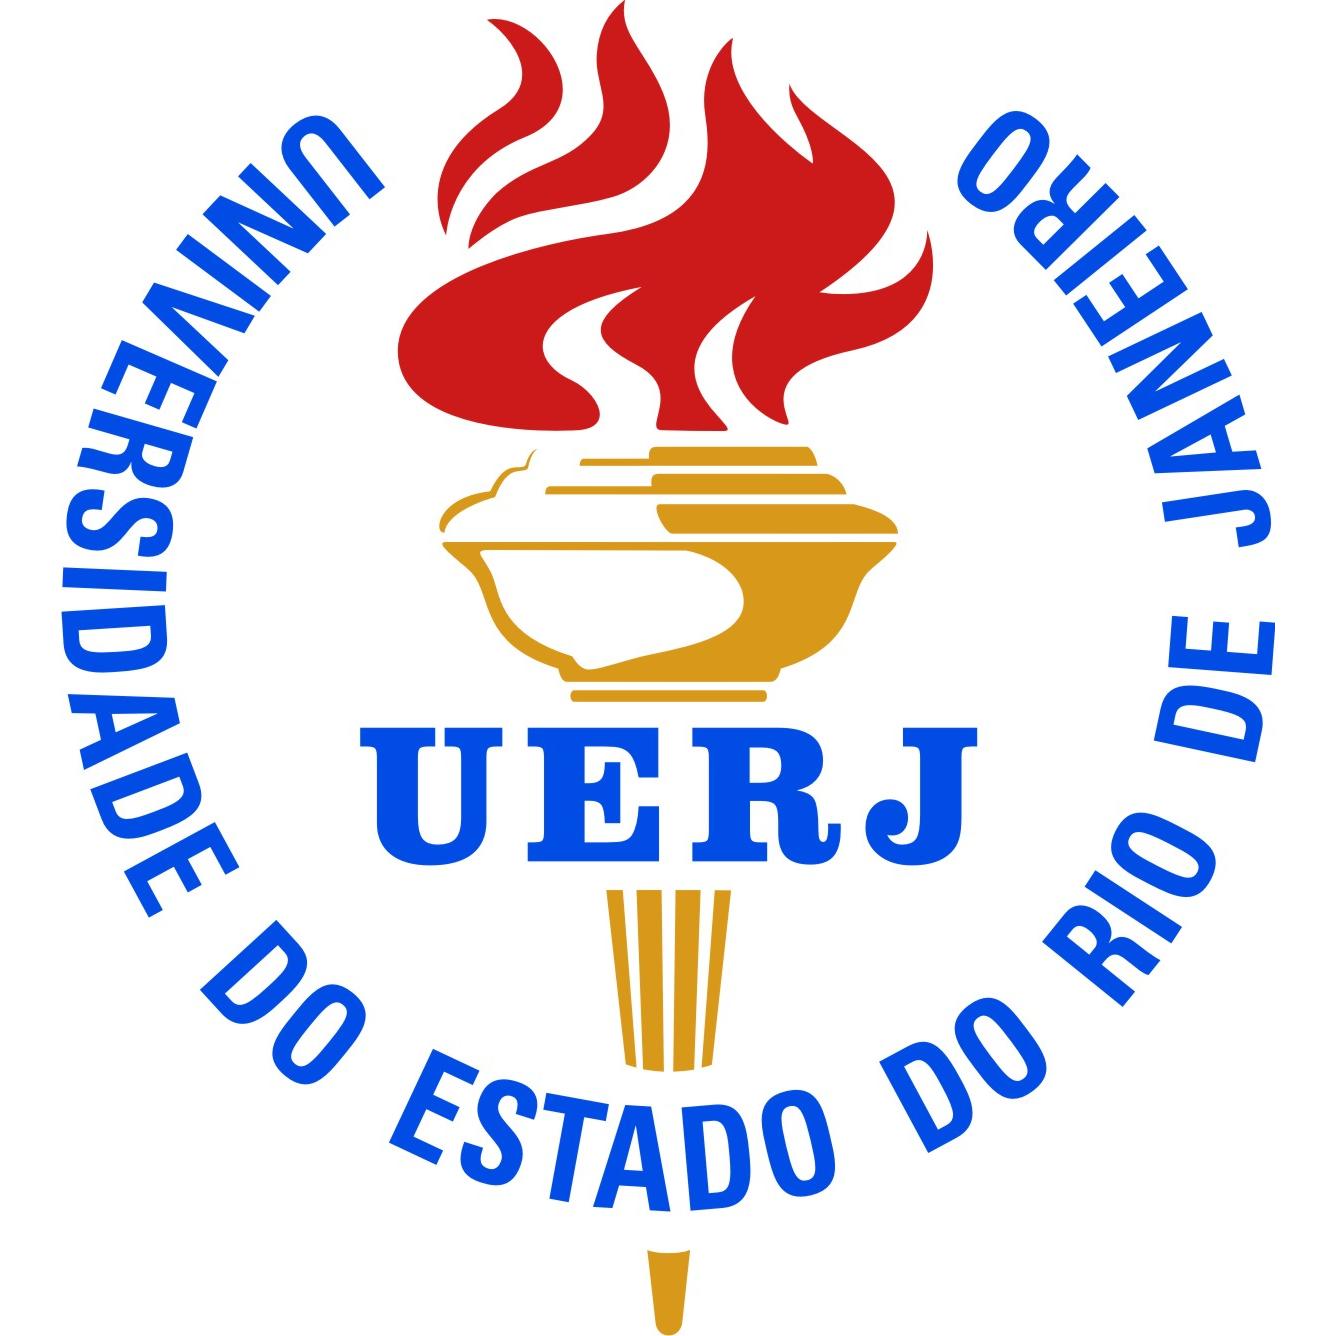 UERJ Logo